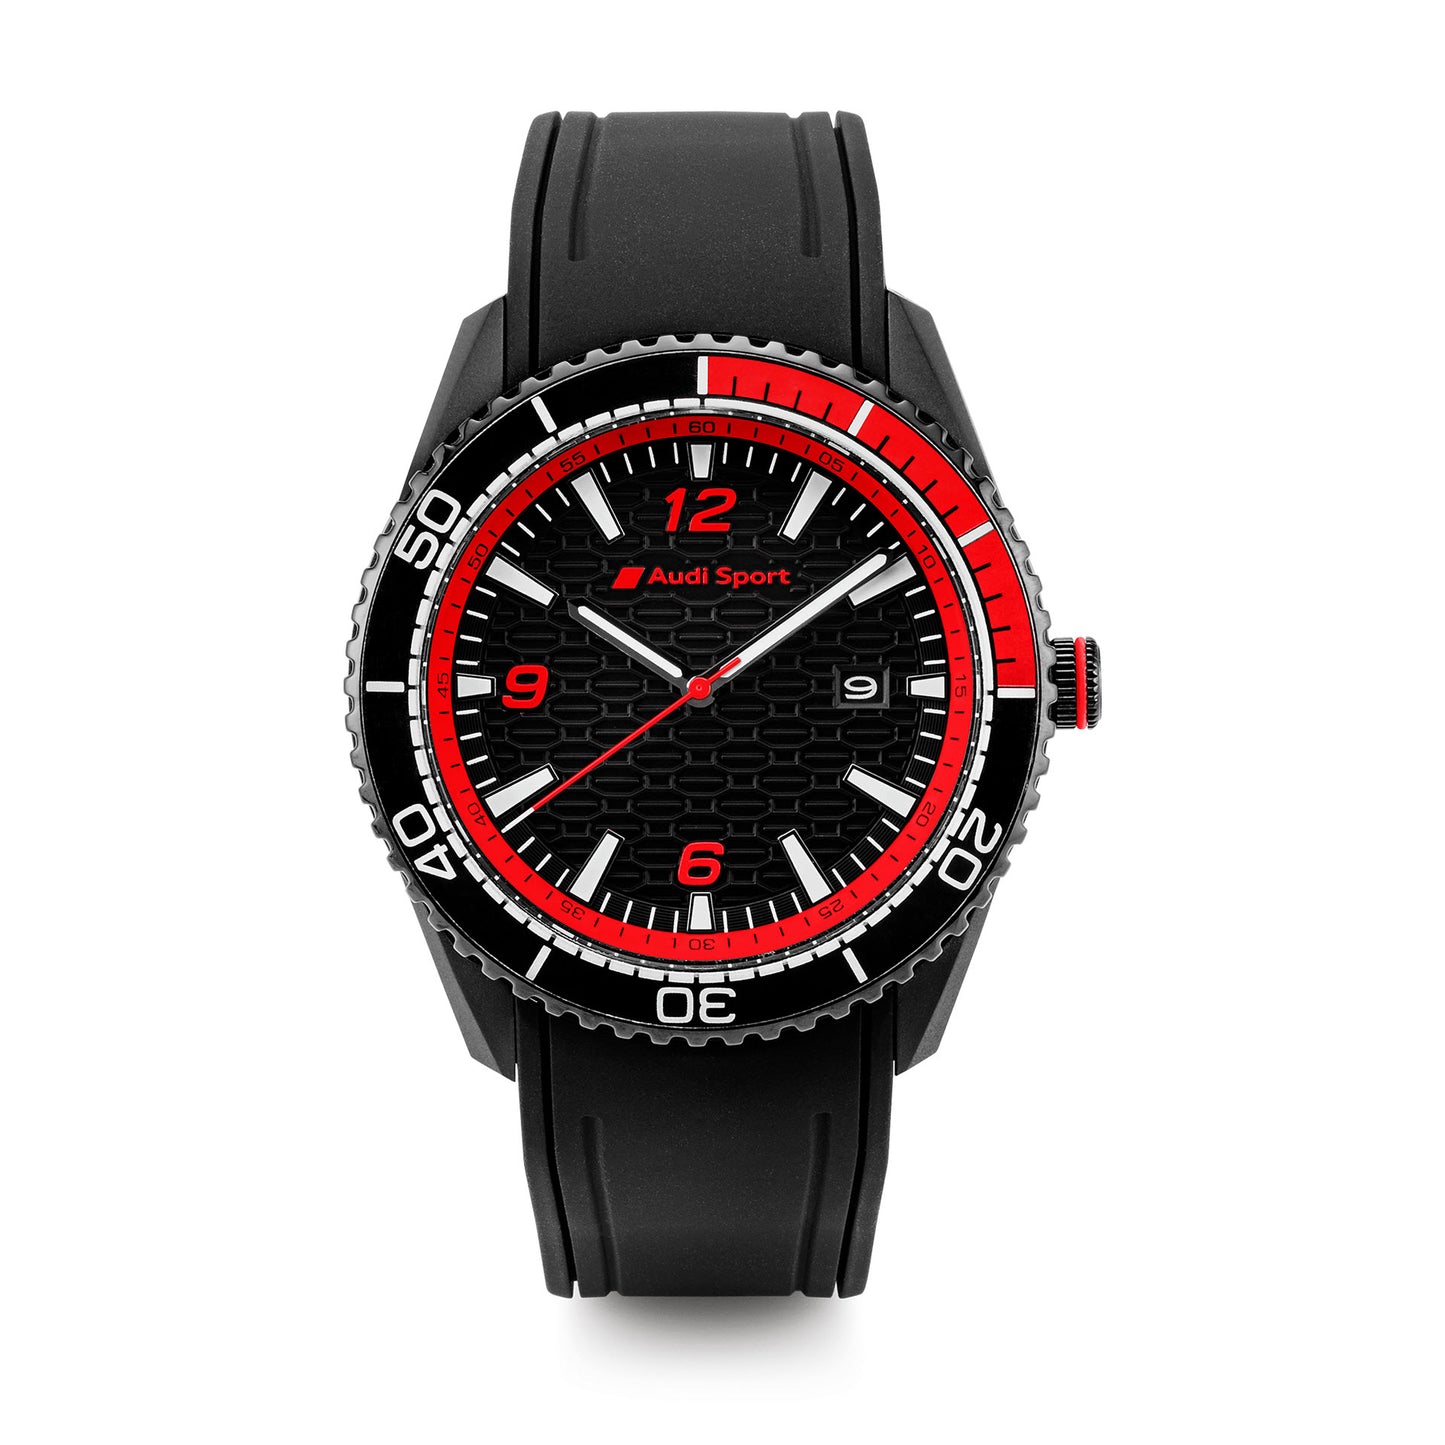 Audi Sport men’s watch, black/red